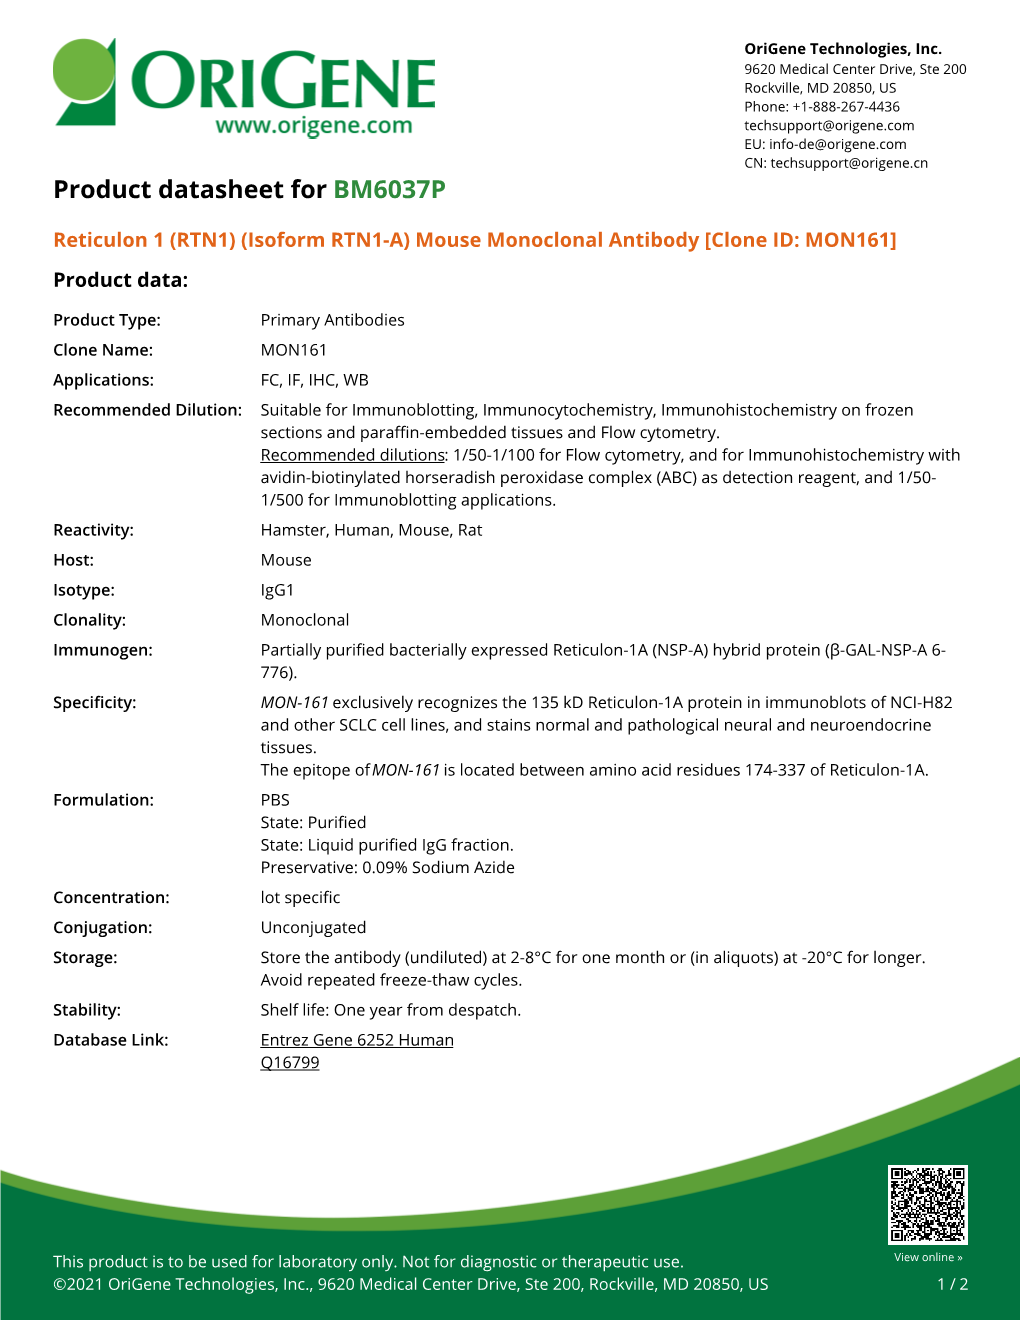 Mouse Monoclonal Antibody [Clone ID: MON161] – BM6037P